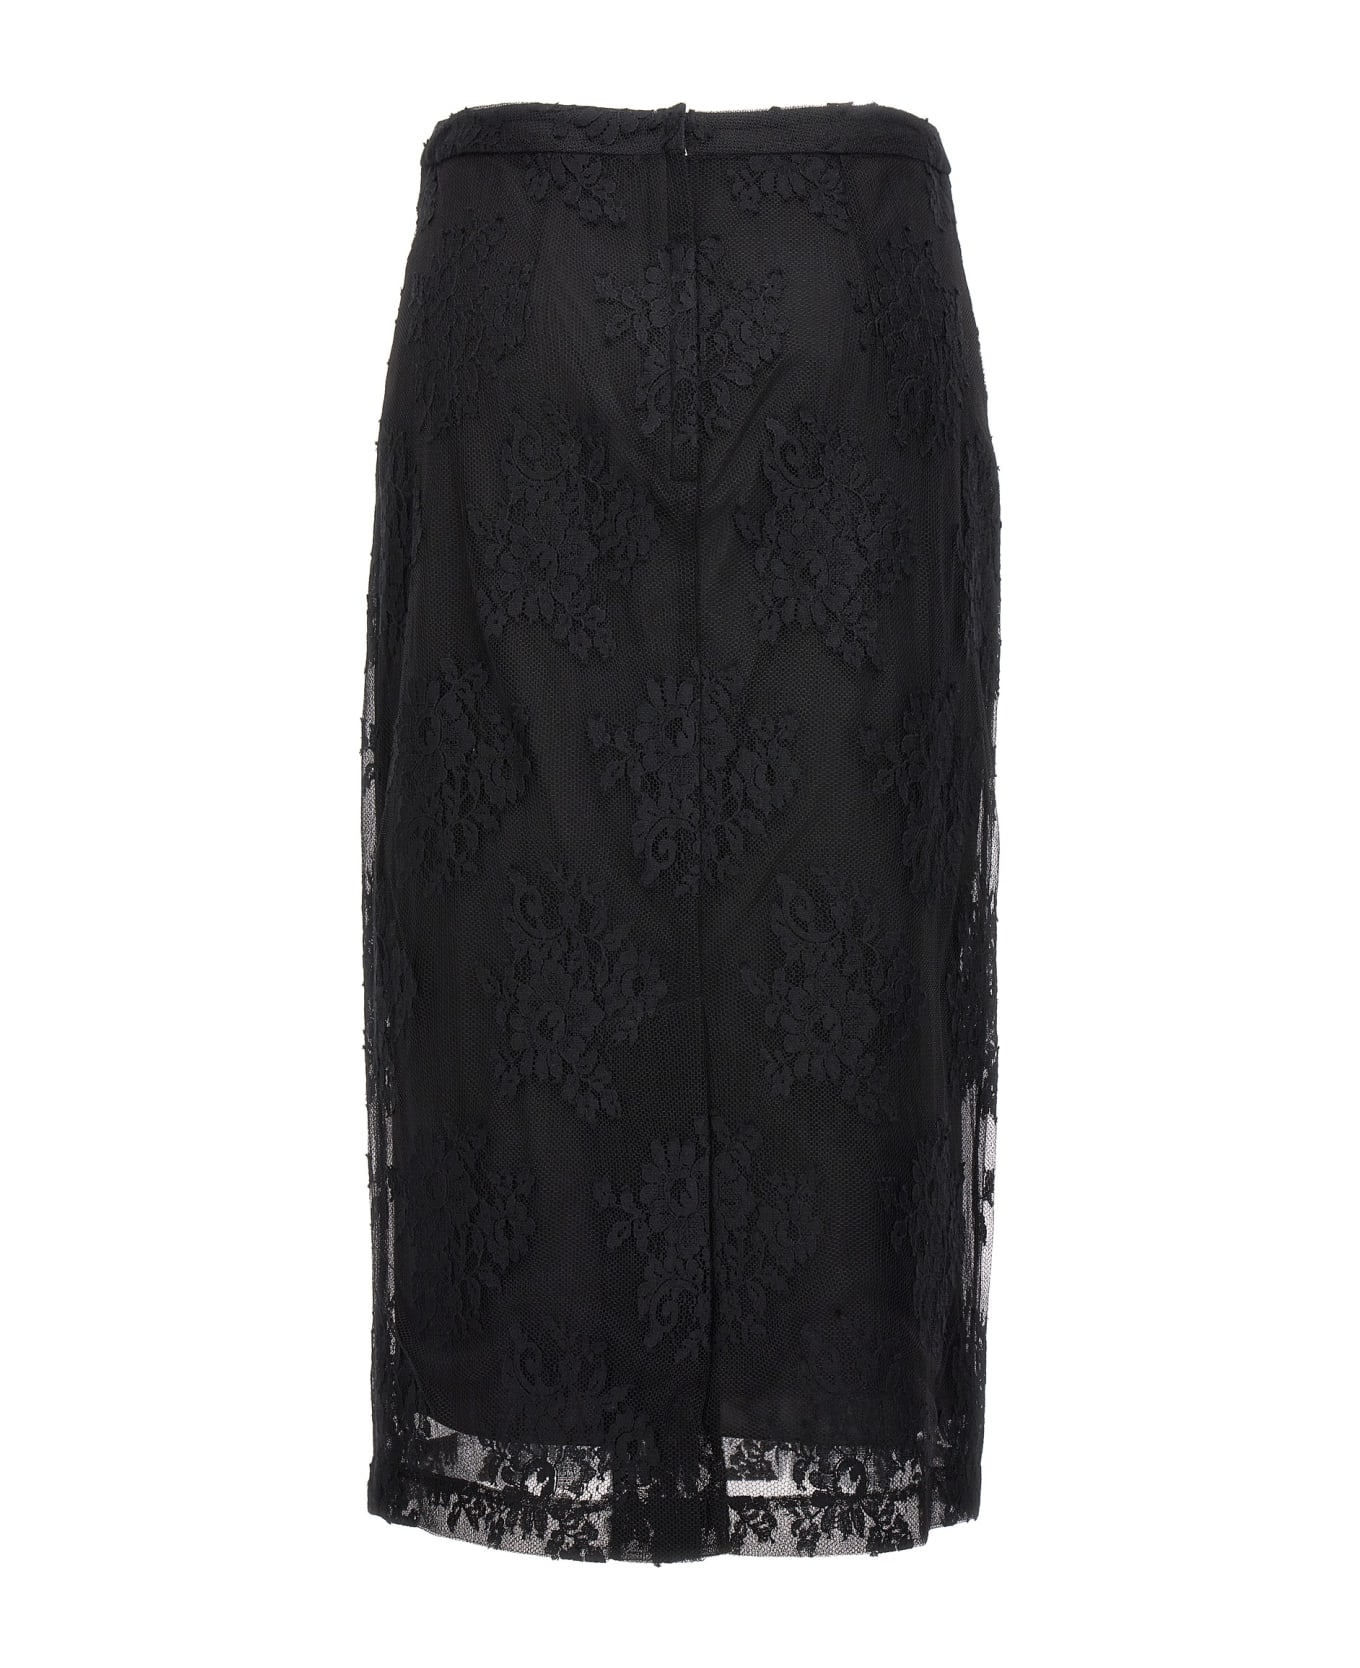 Dolce and & Gabbana Lace Sheath Skirt - Black  